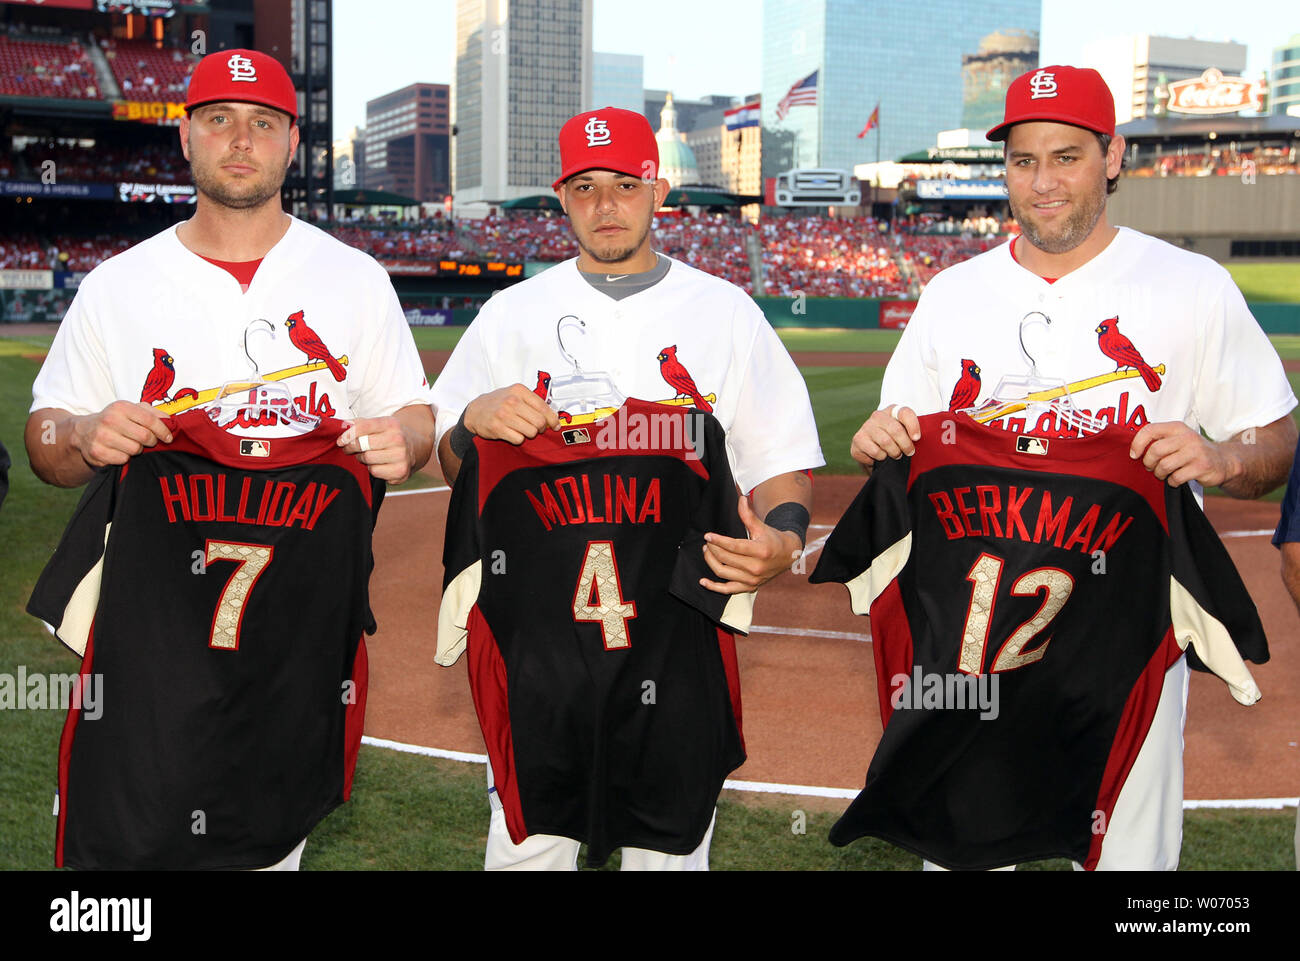 St. Louis Cardinals (L to R) Matt Holliday, Yadier Molina and